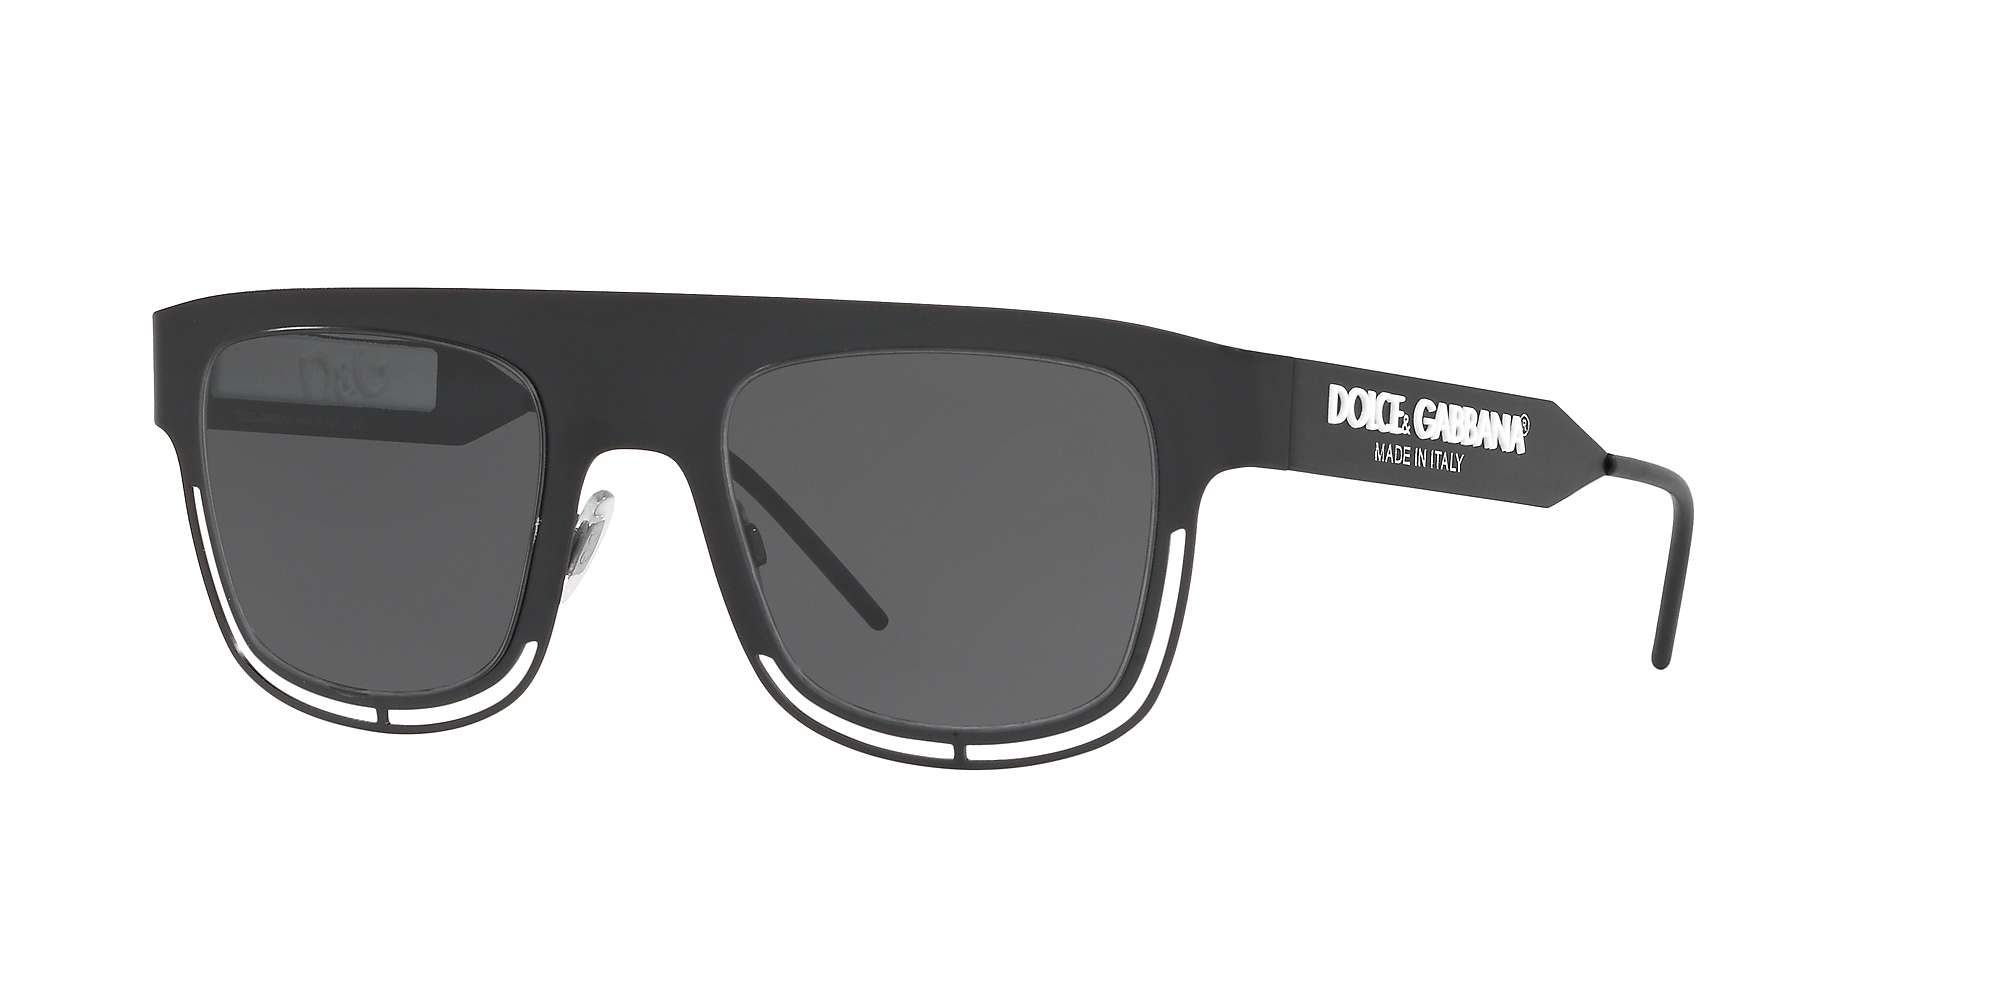 Buy Dolce & Gabbana DG2232 Men's Square Sunglasses, Black/Grey Online at johnlewis.com